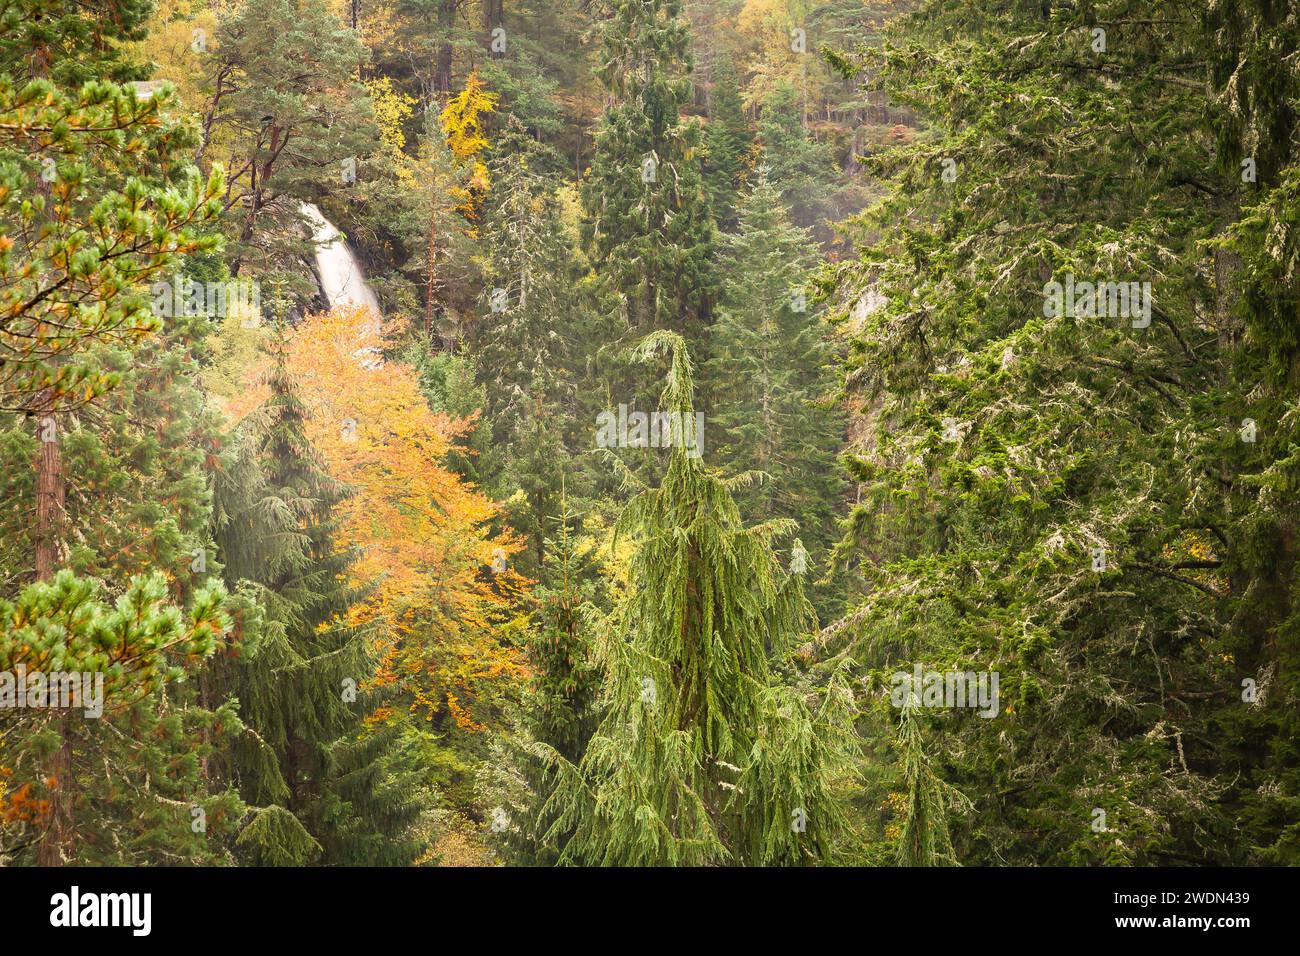 Plodda Falls waterfall in forest in autumn. Scottish highlands landscape, Scotland, UK Stock Photo